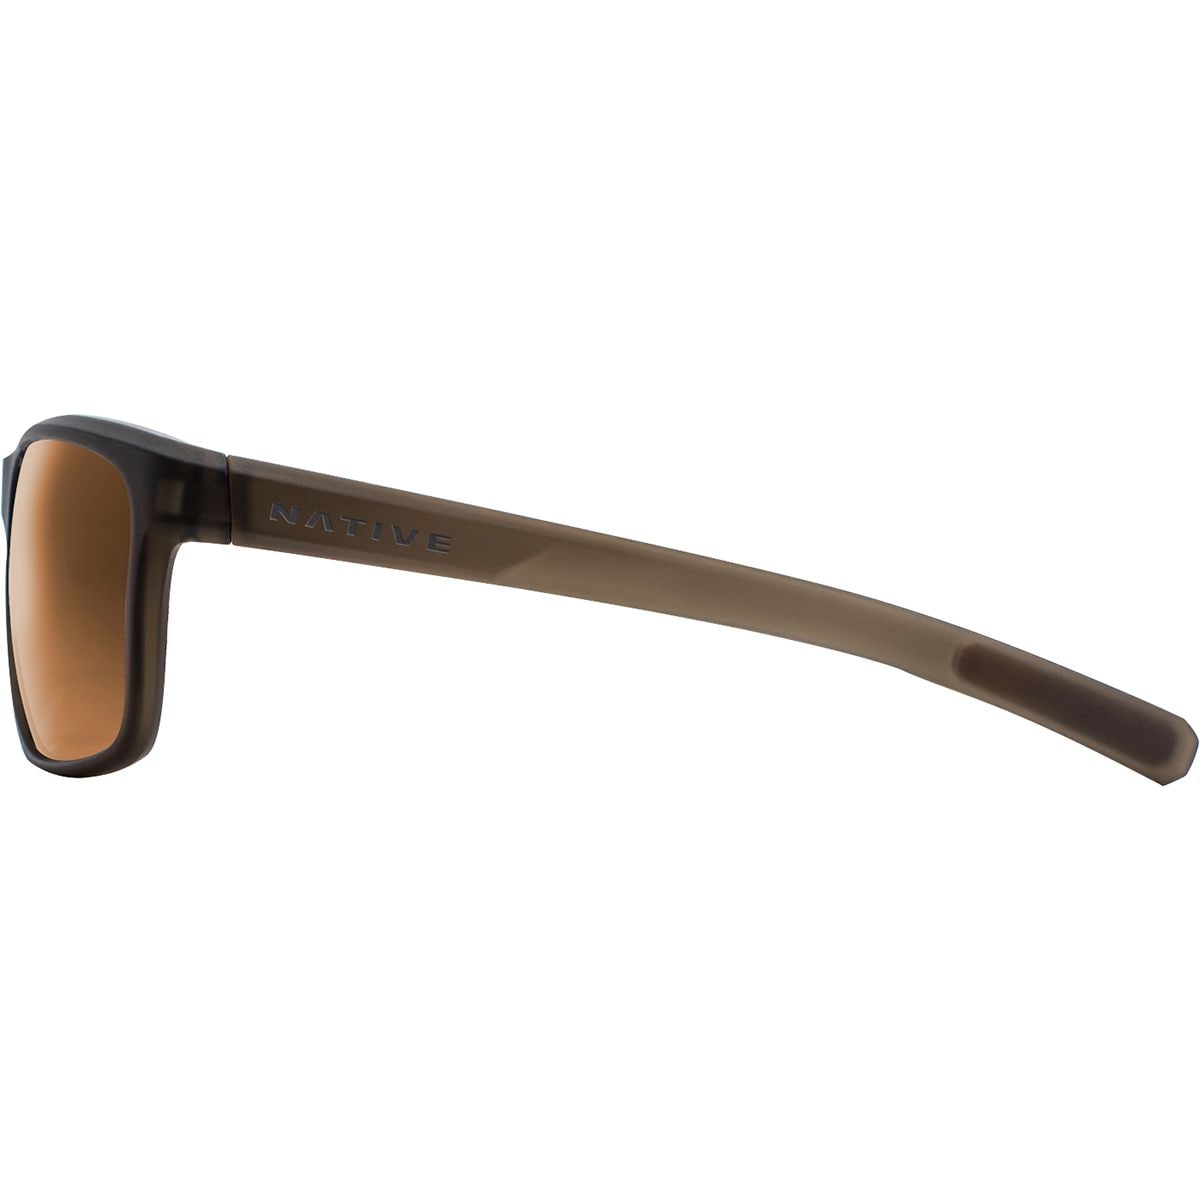  Native Eyewear Wells Polarized Sunglasses - Accessories